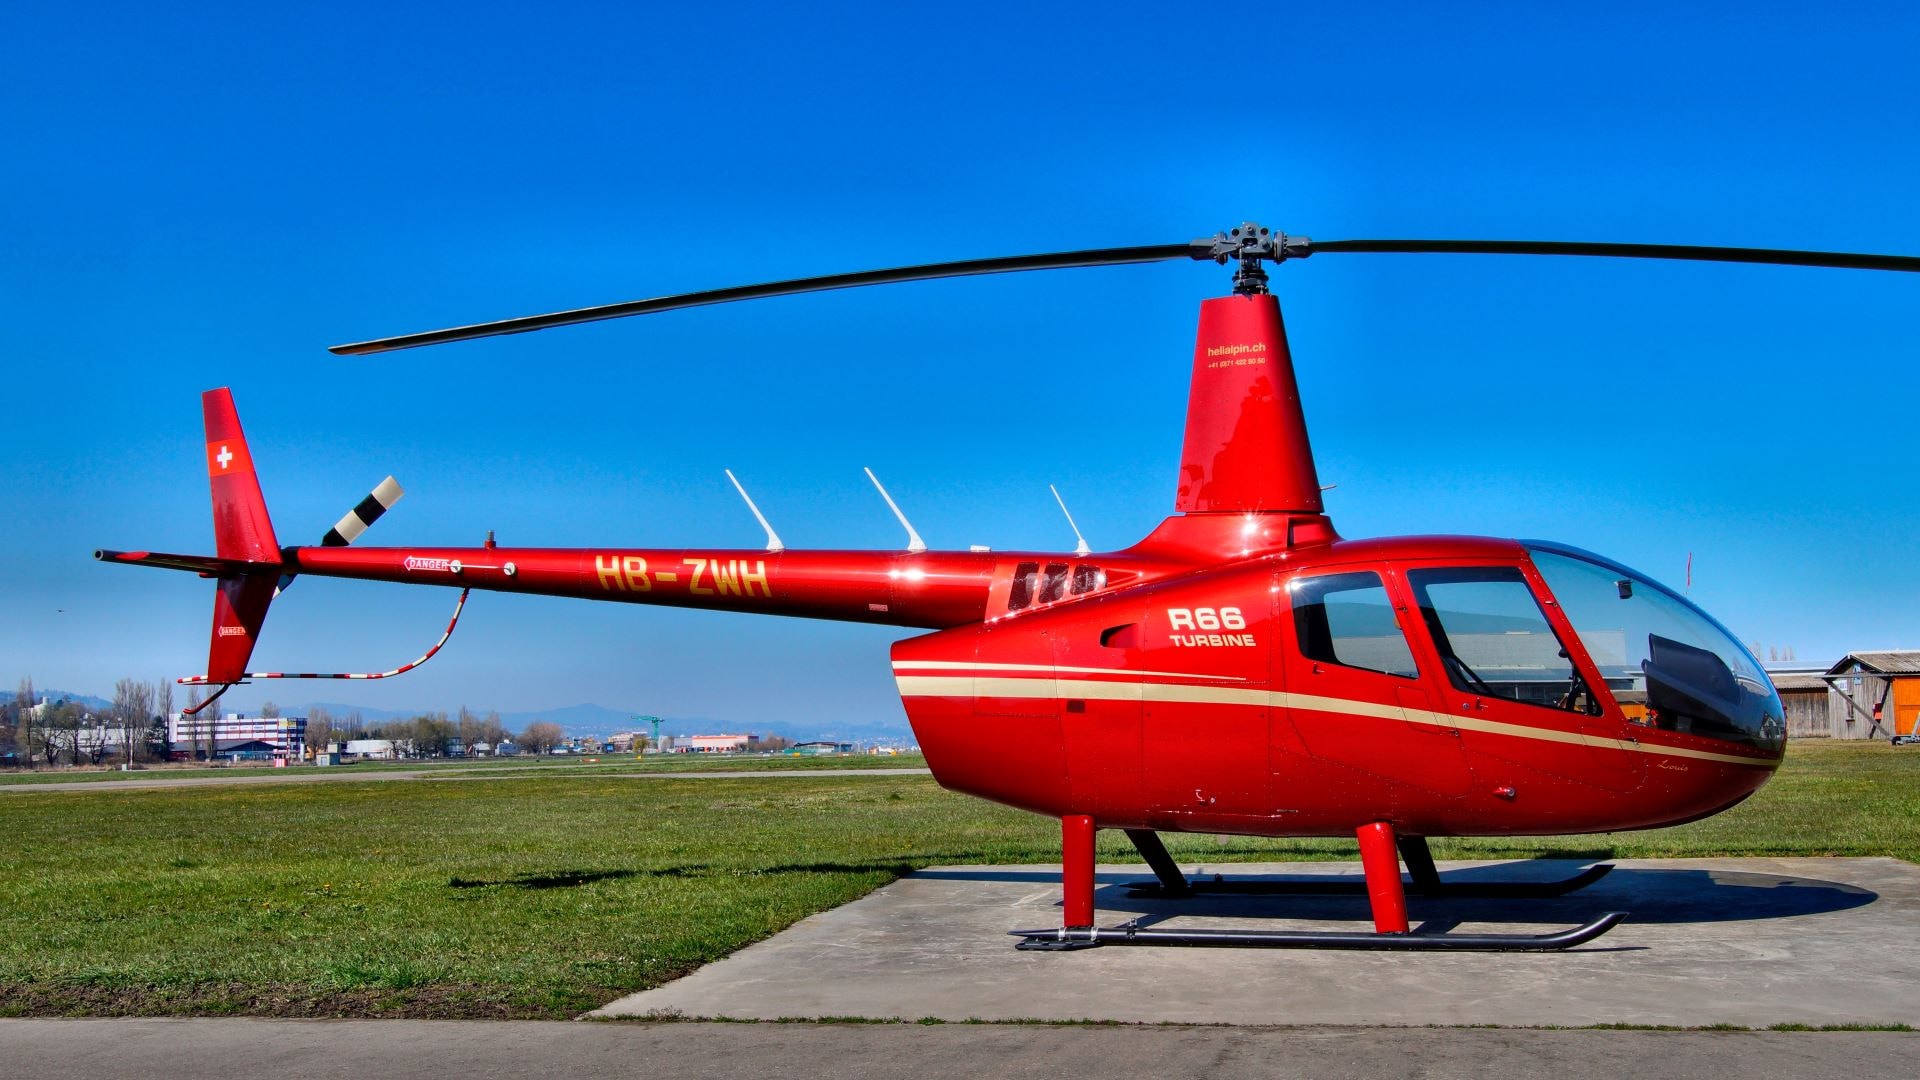 Helikoptermodell R66 Turbine